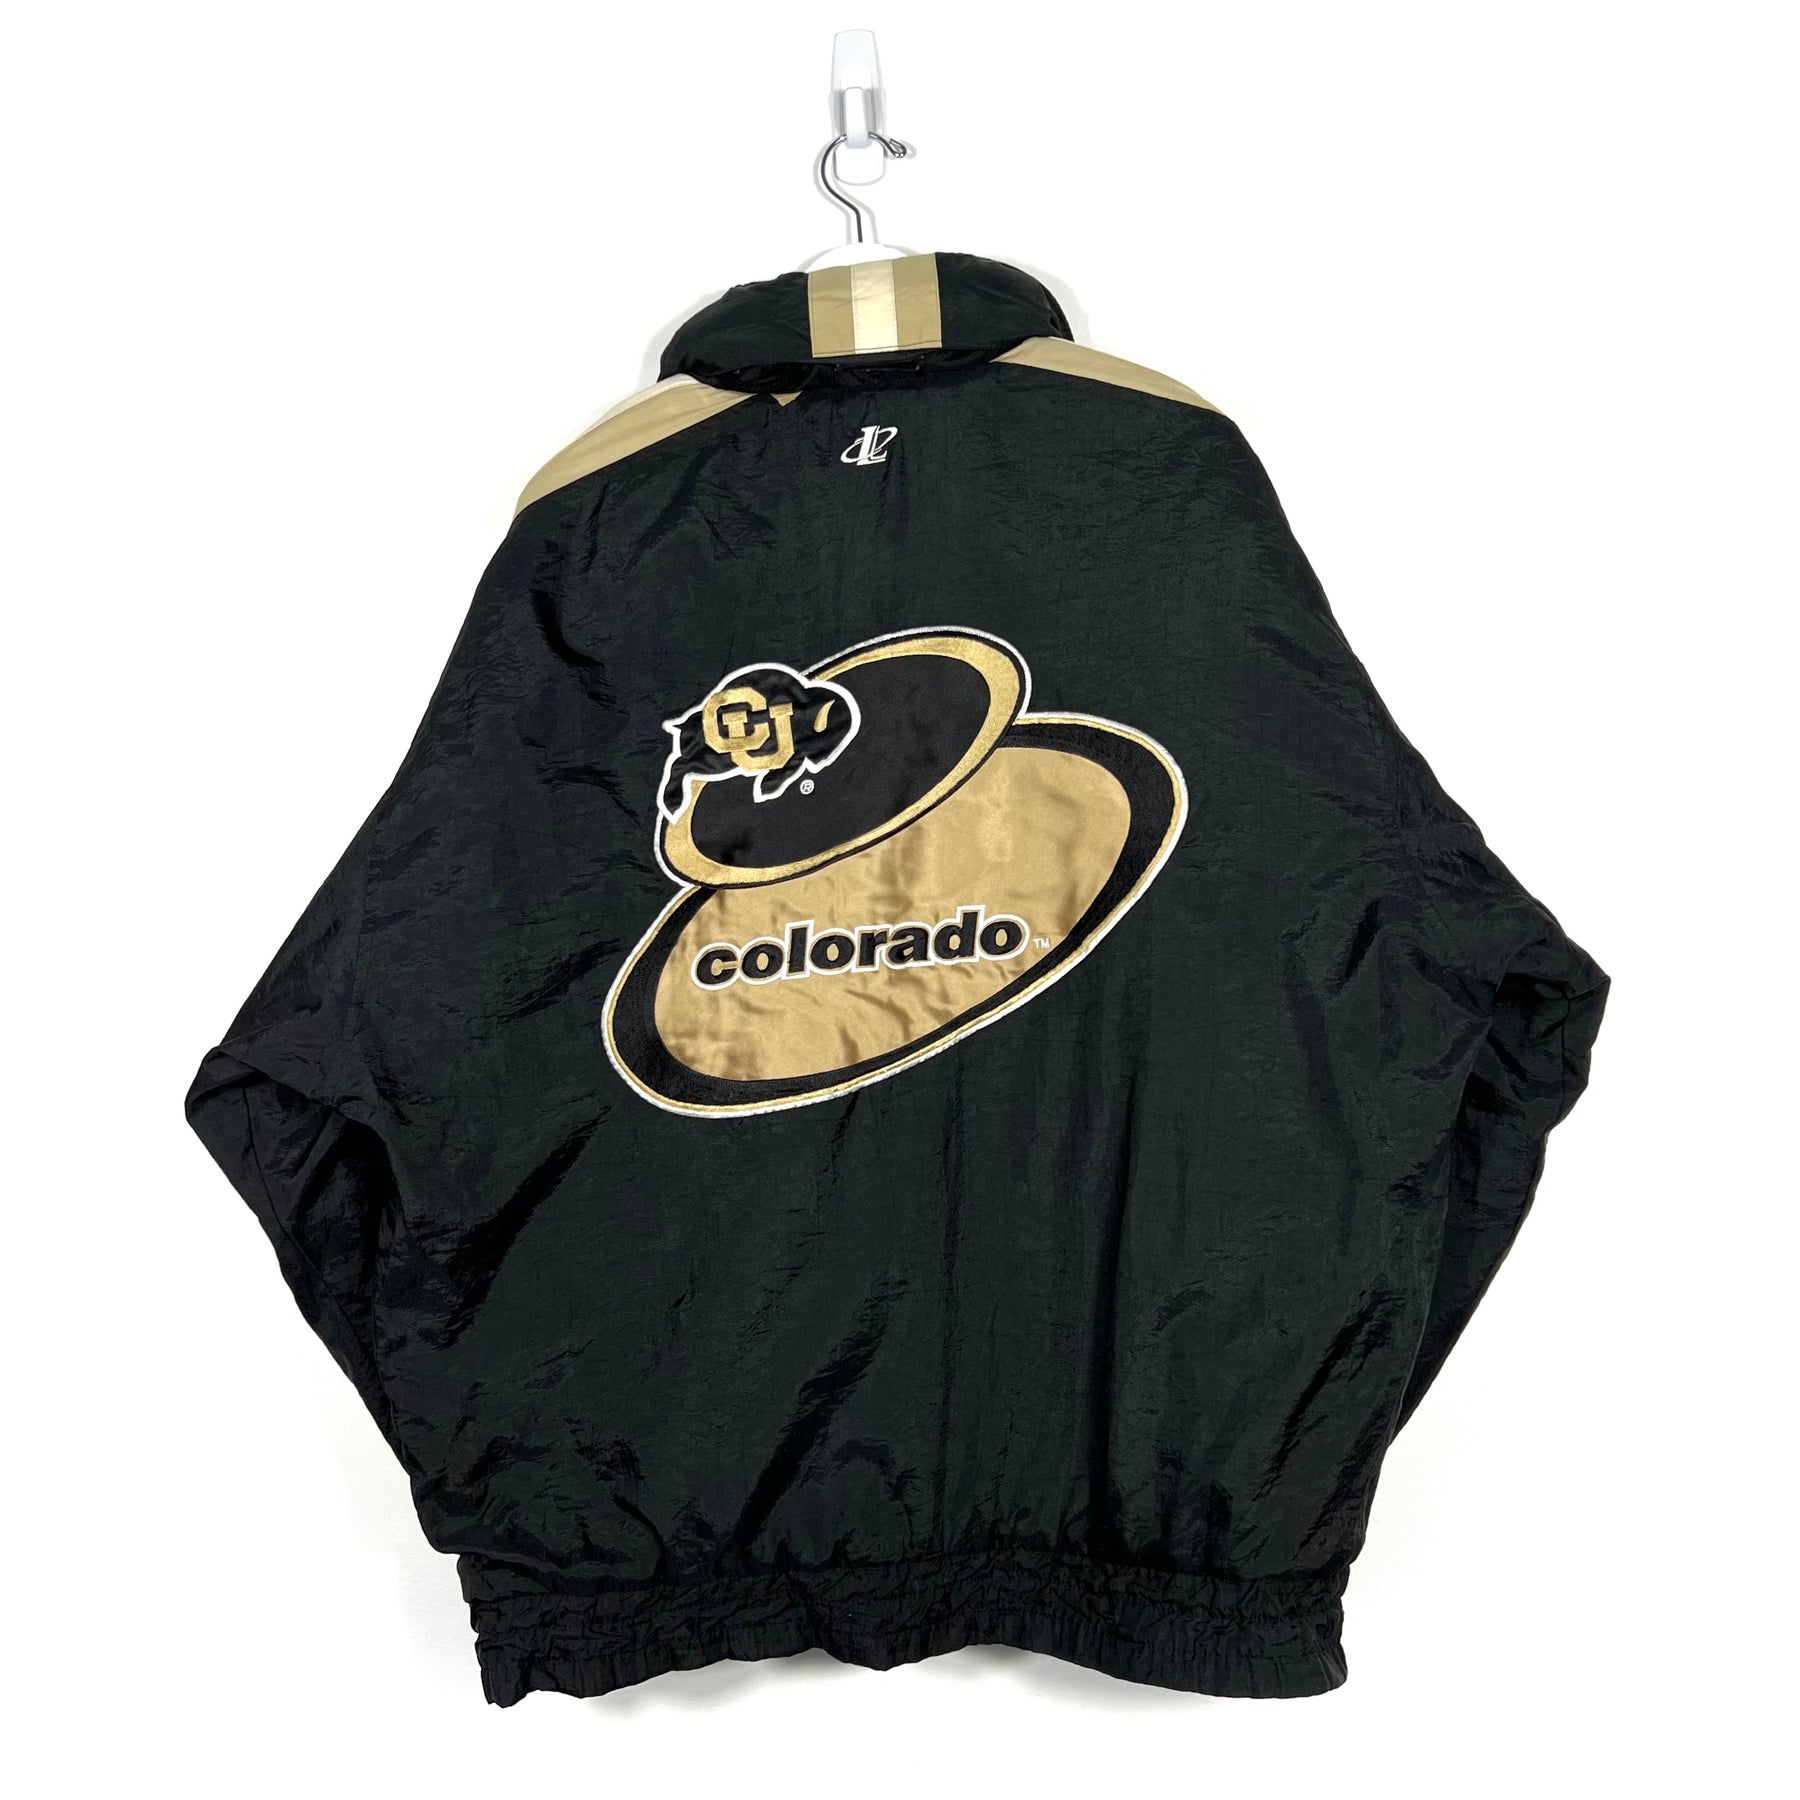 Vintage NFL Colorado Buffaloes Jacket - Men's XL